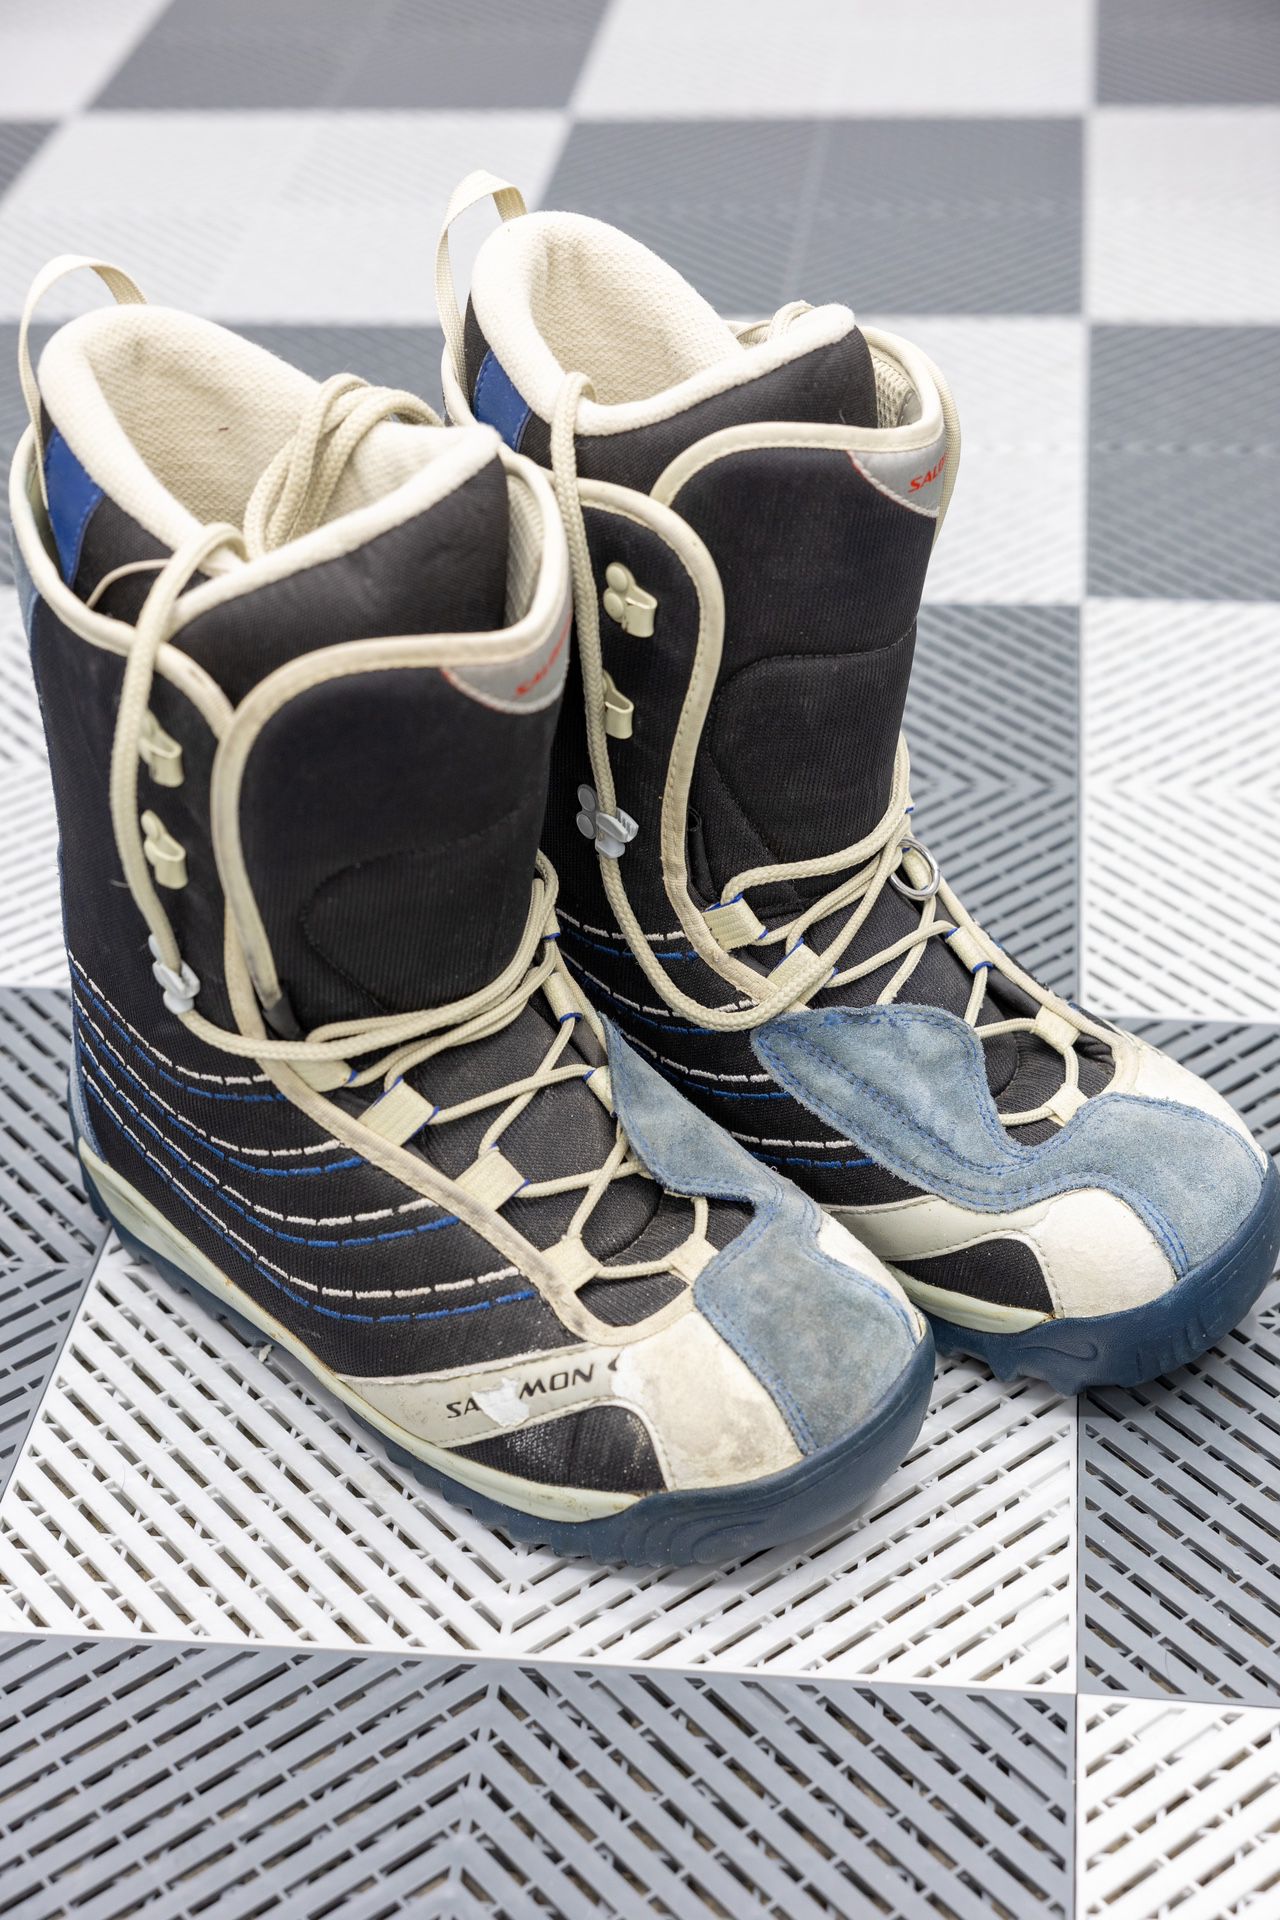 Salomon Snowboard Boots. Size 9.5